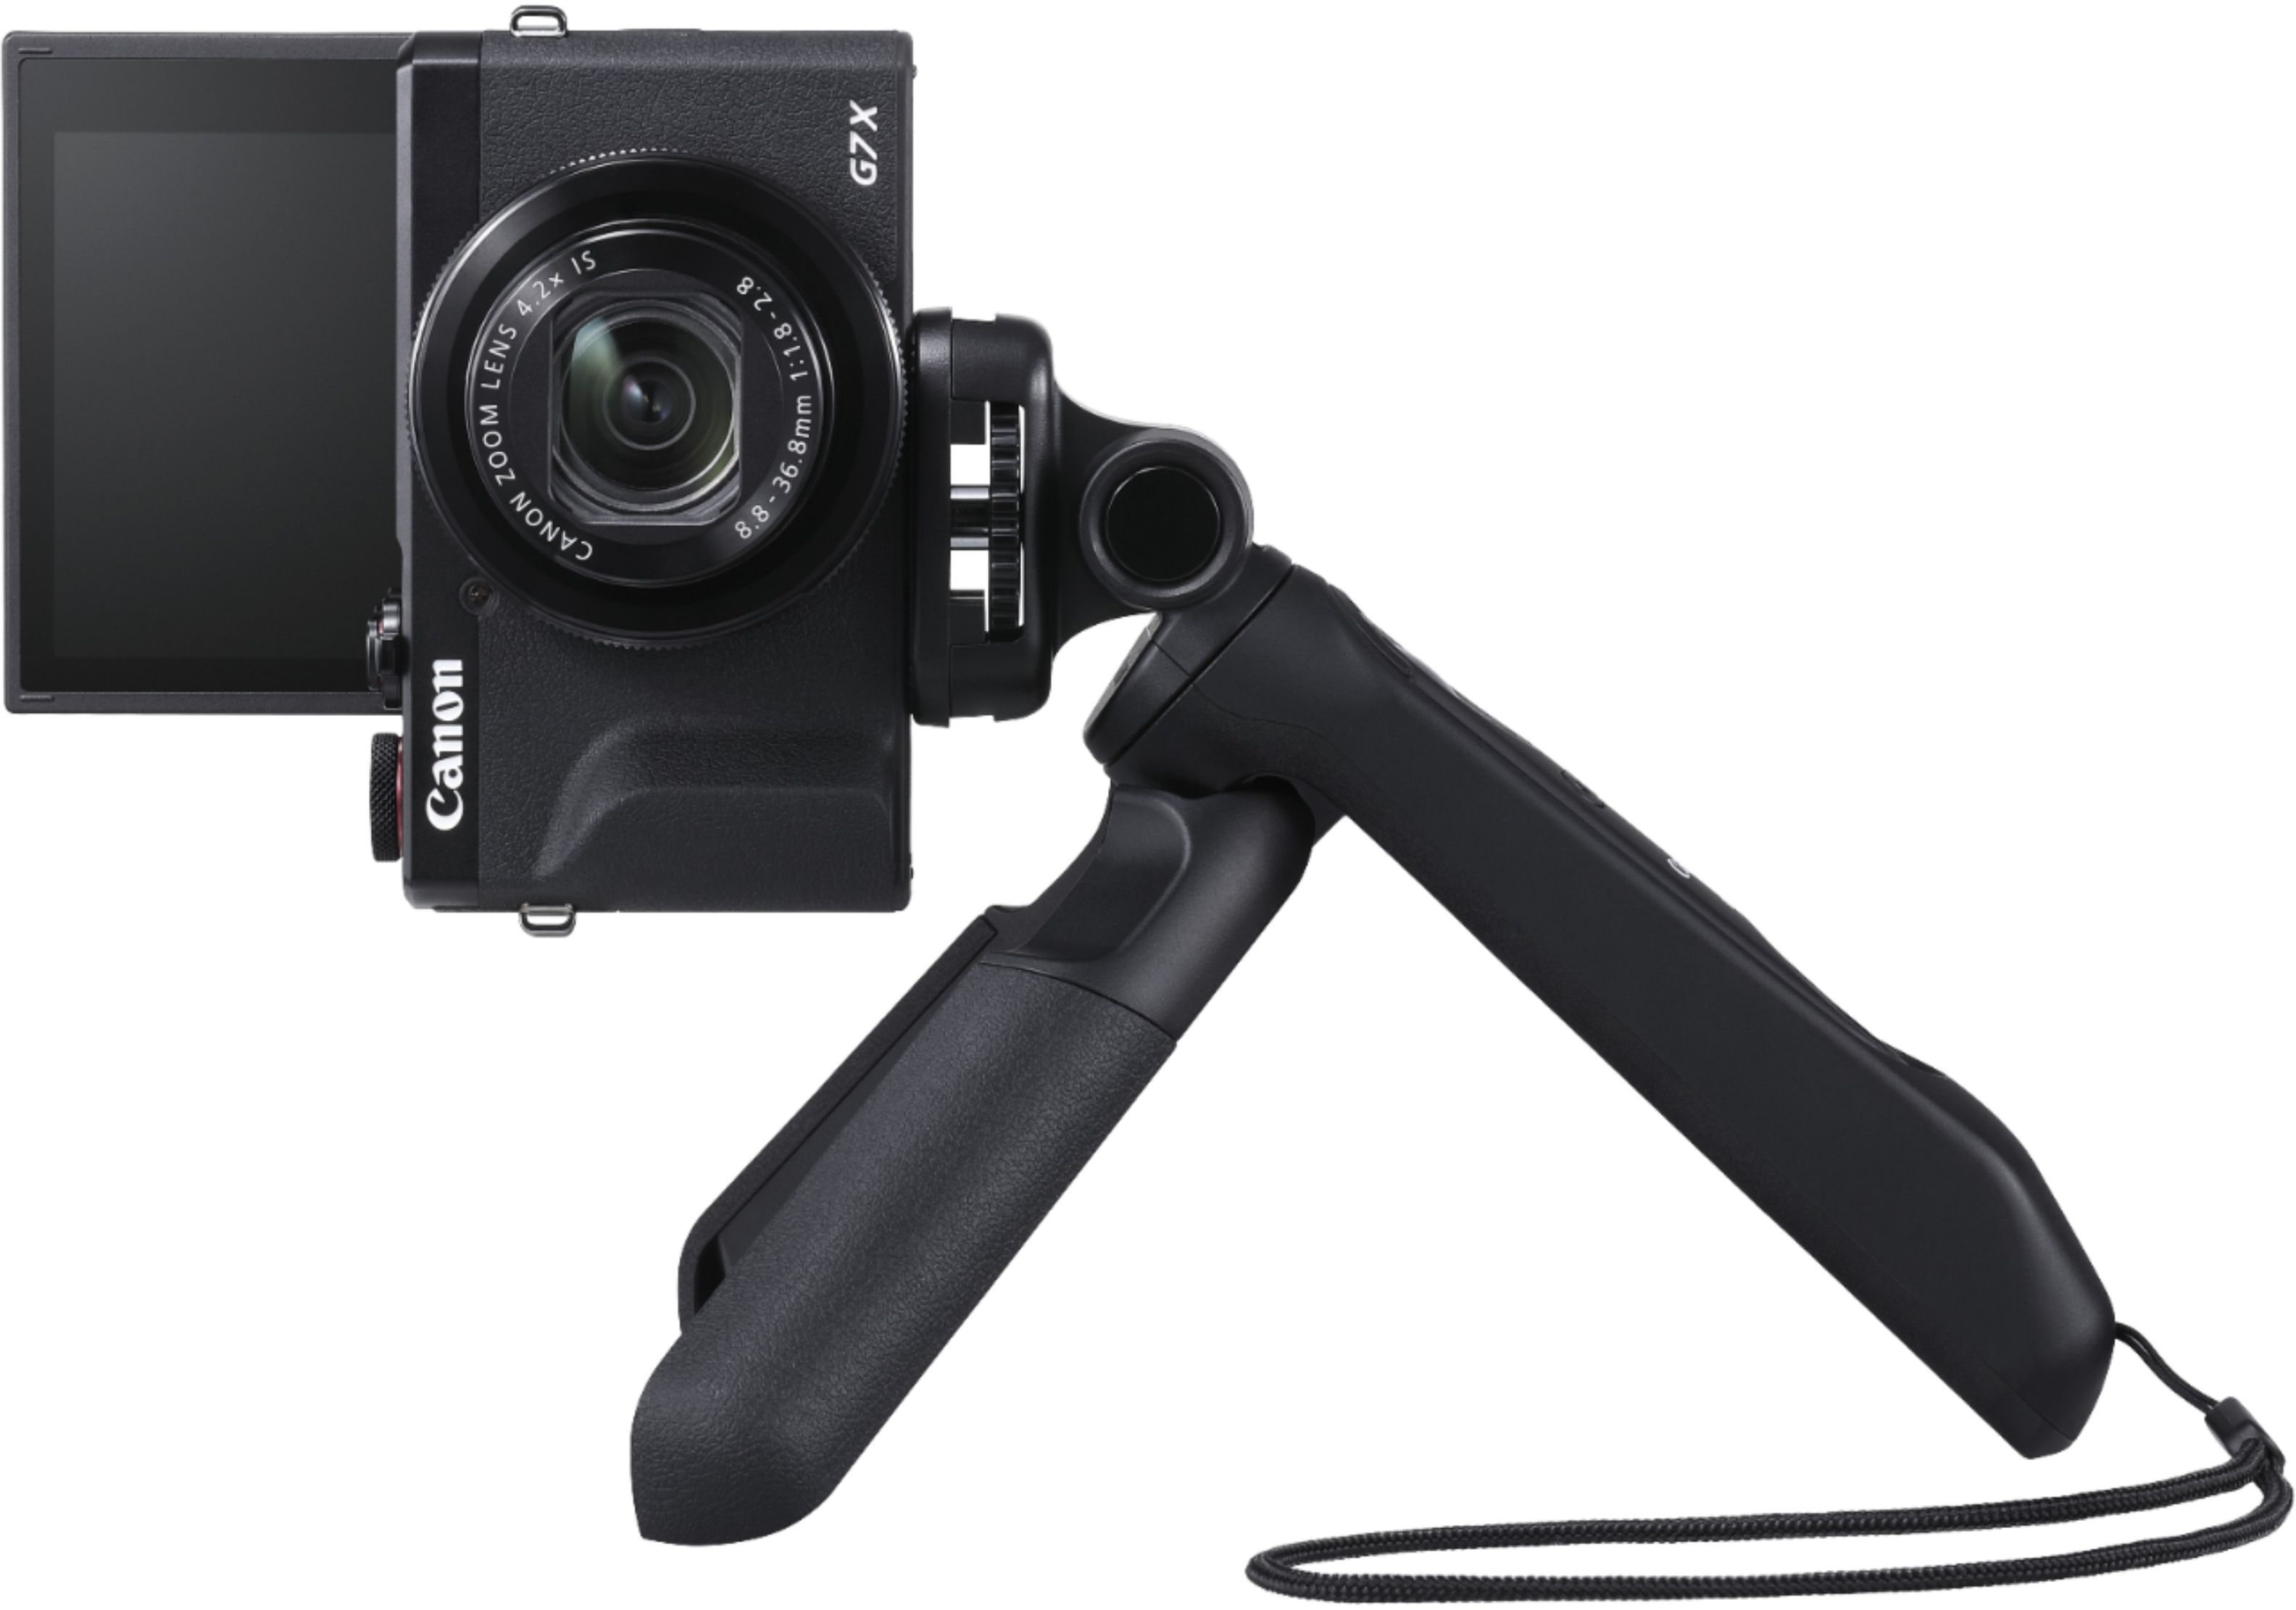 Canon PowerShot G7 X Mark III Digital Camera (Silver) (3638C001) + 64GB  Memory Card + NB13L Battery + Charger + Card Reader + Corel Photo Software  +